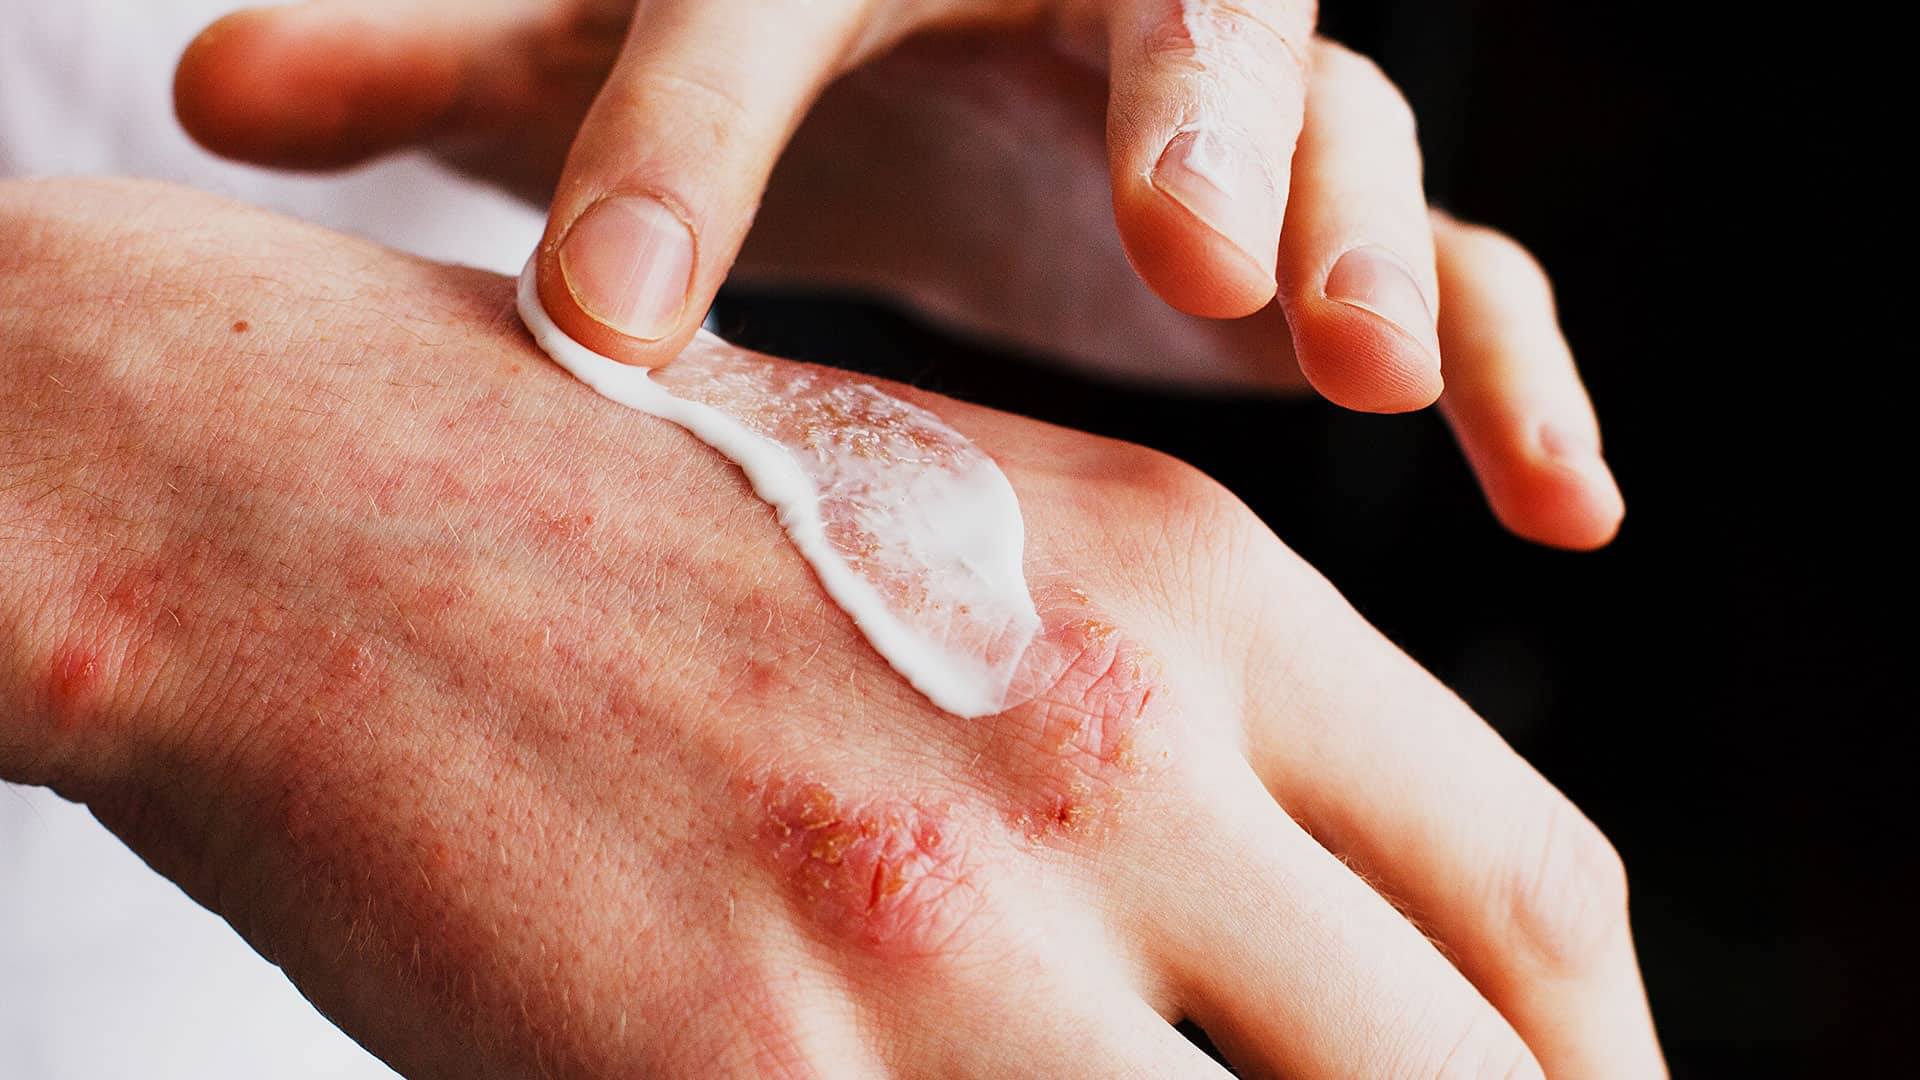 Moisturisers should be applied on affected area eczema